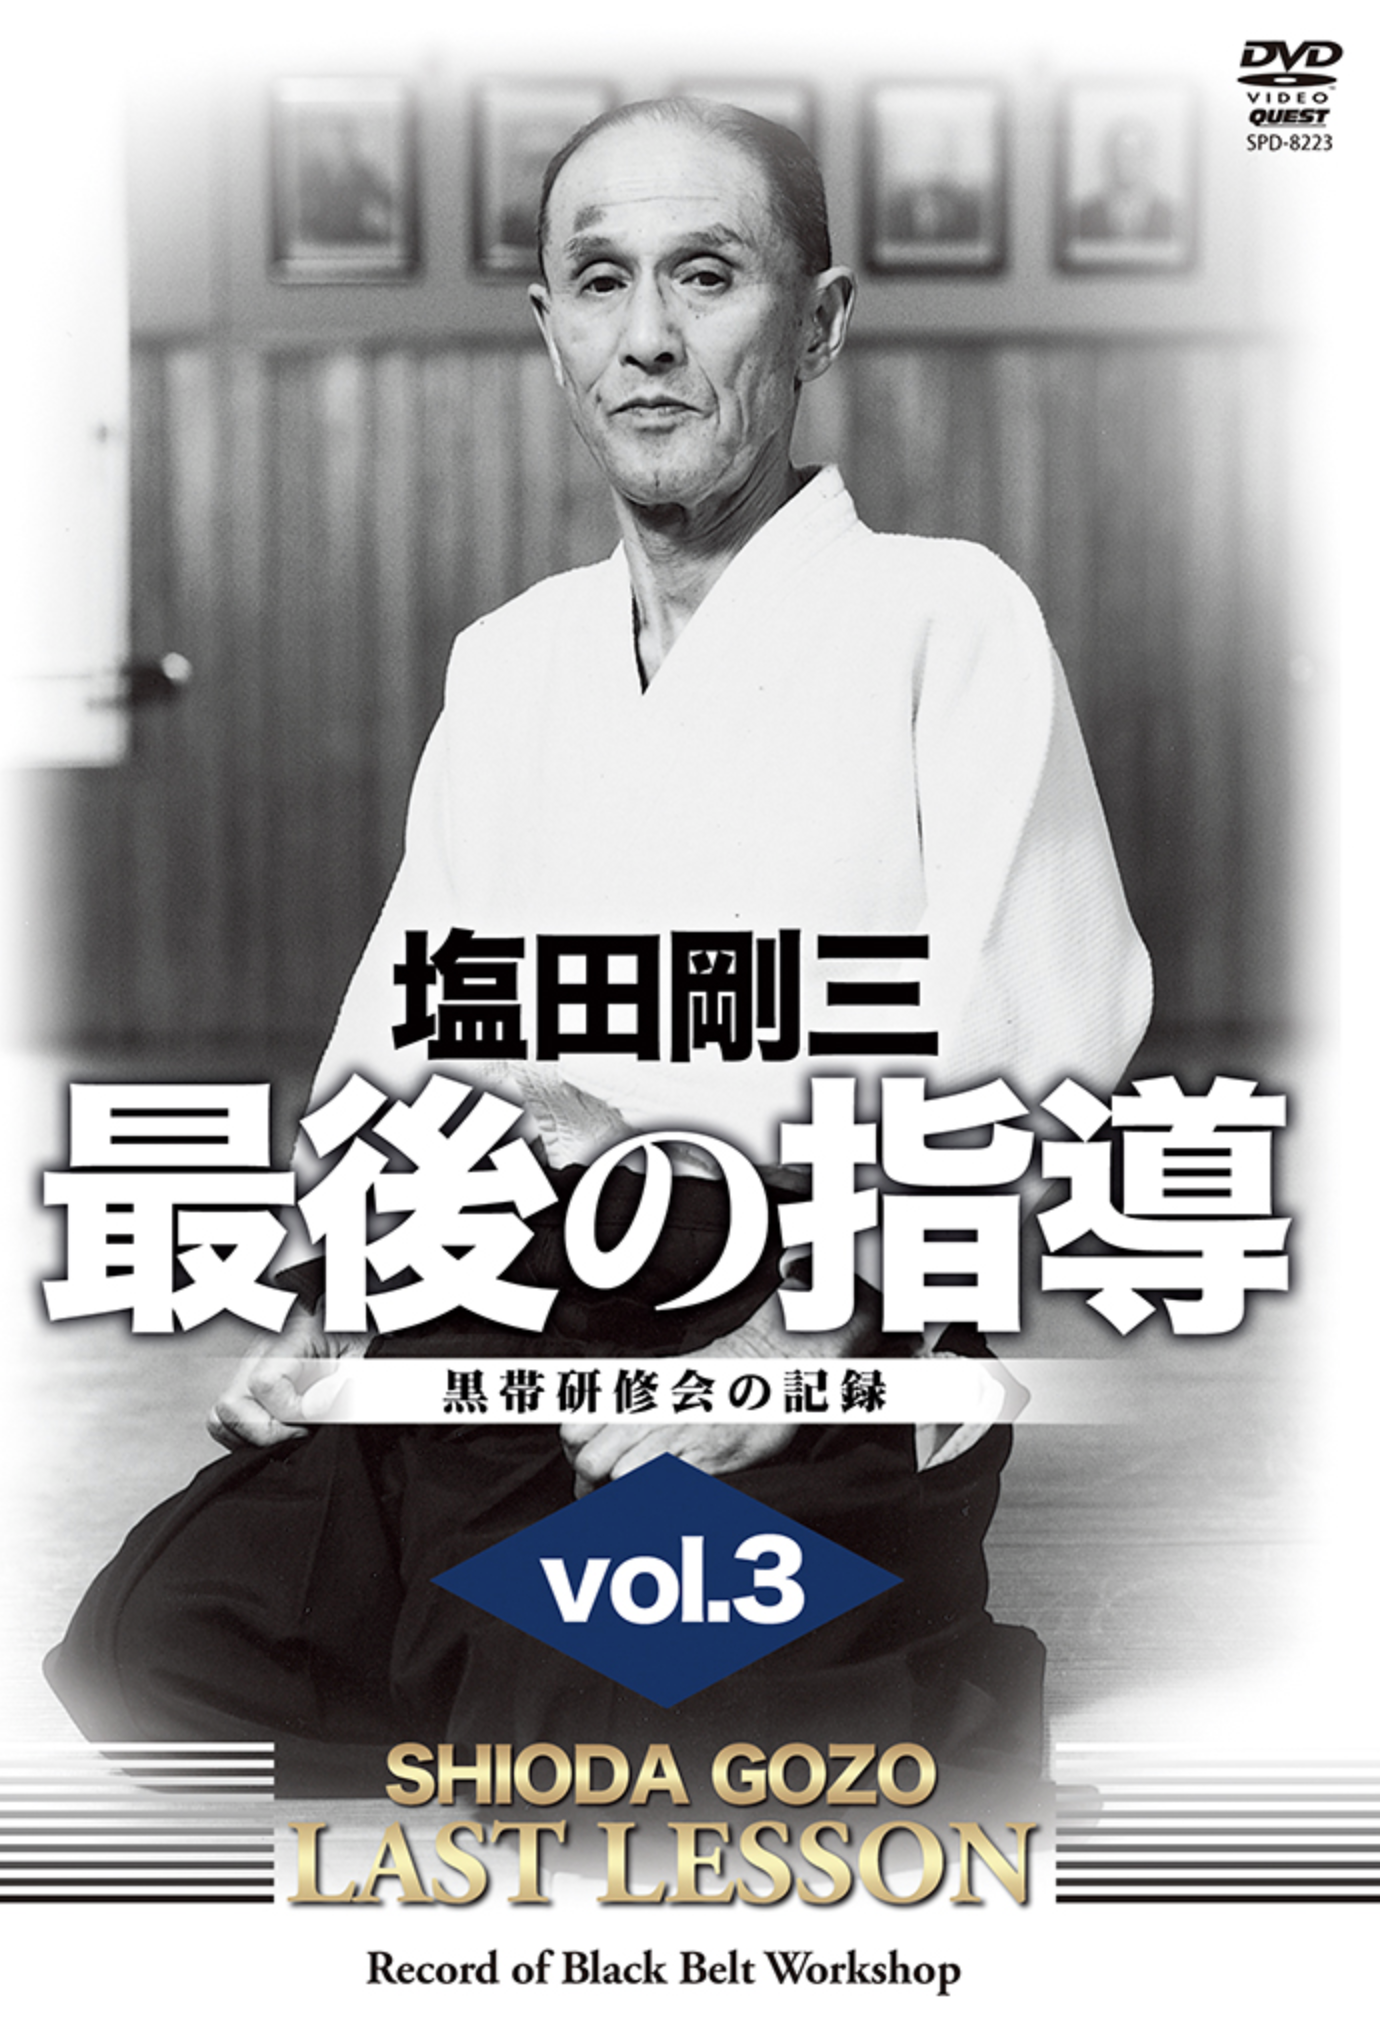 Gozo Shioda Last Lesson DVD 3 Yoshinkan Aikido - Budovideos Inc